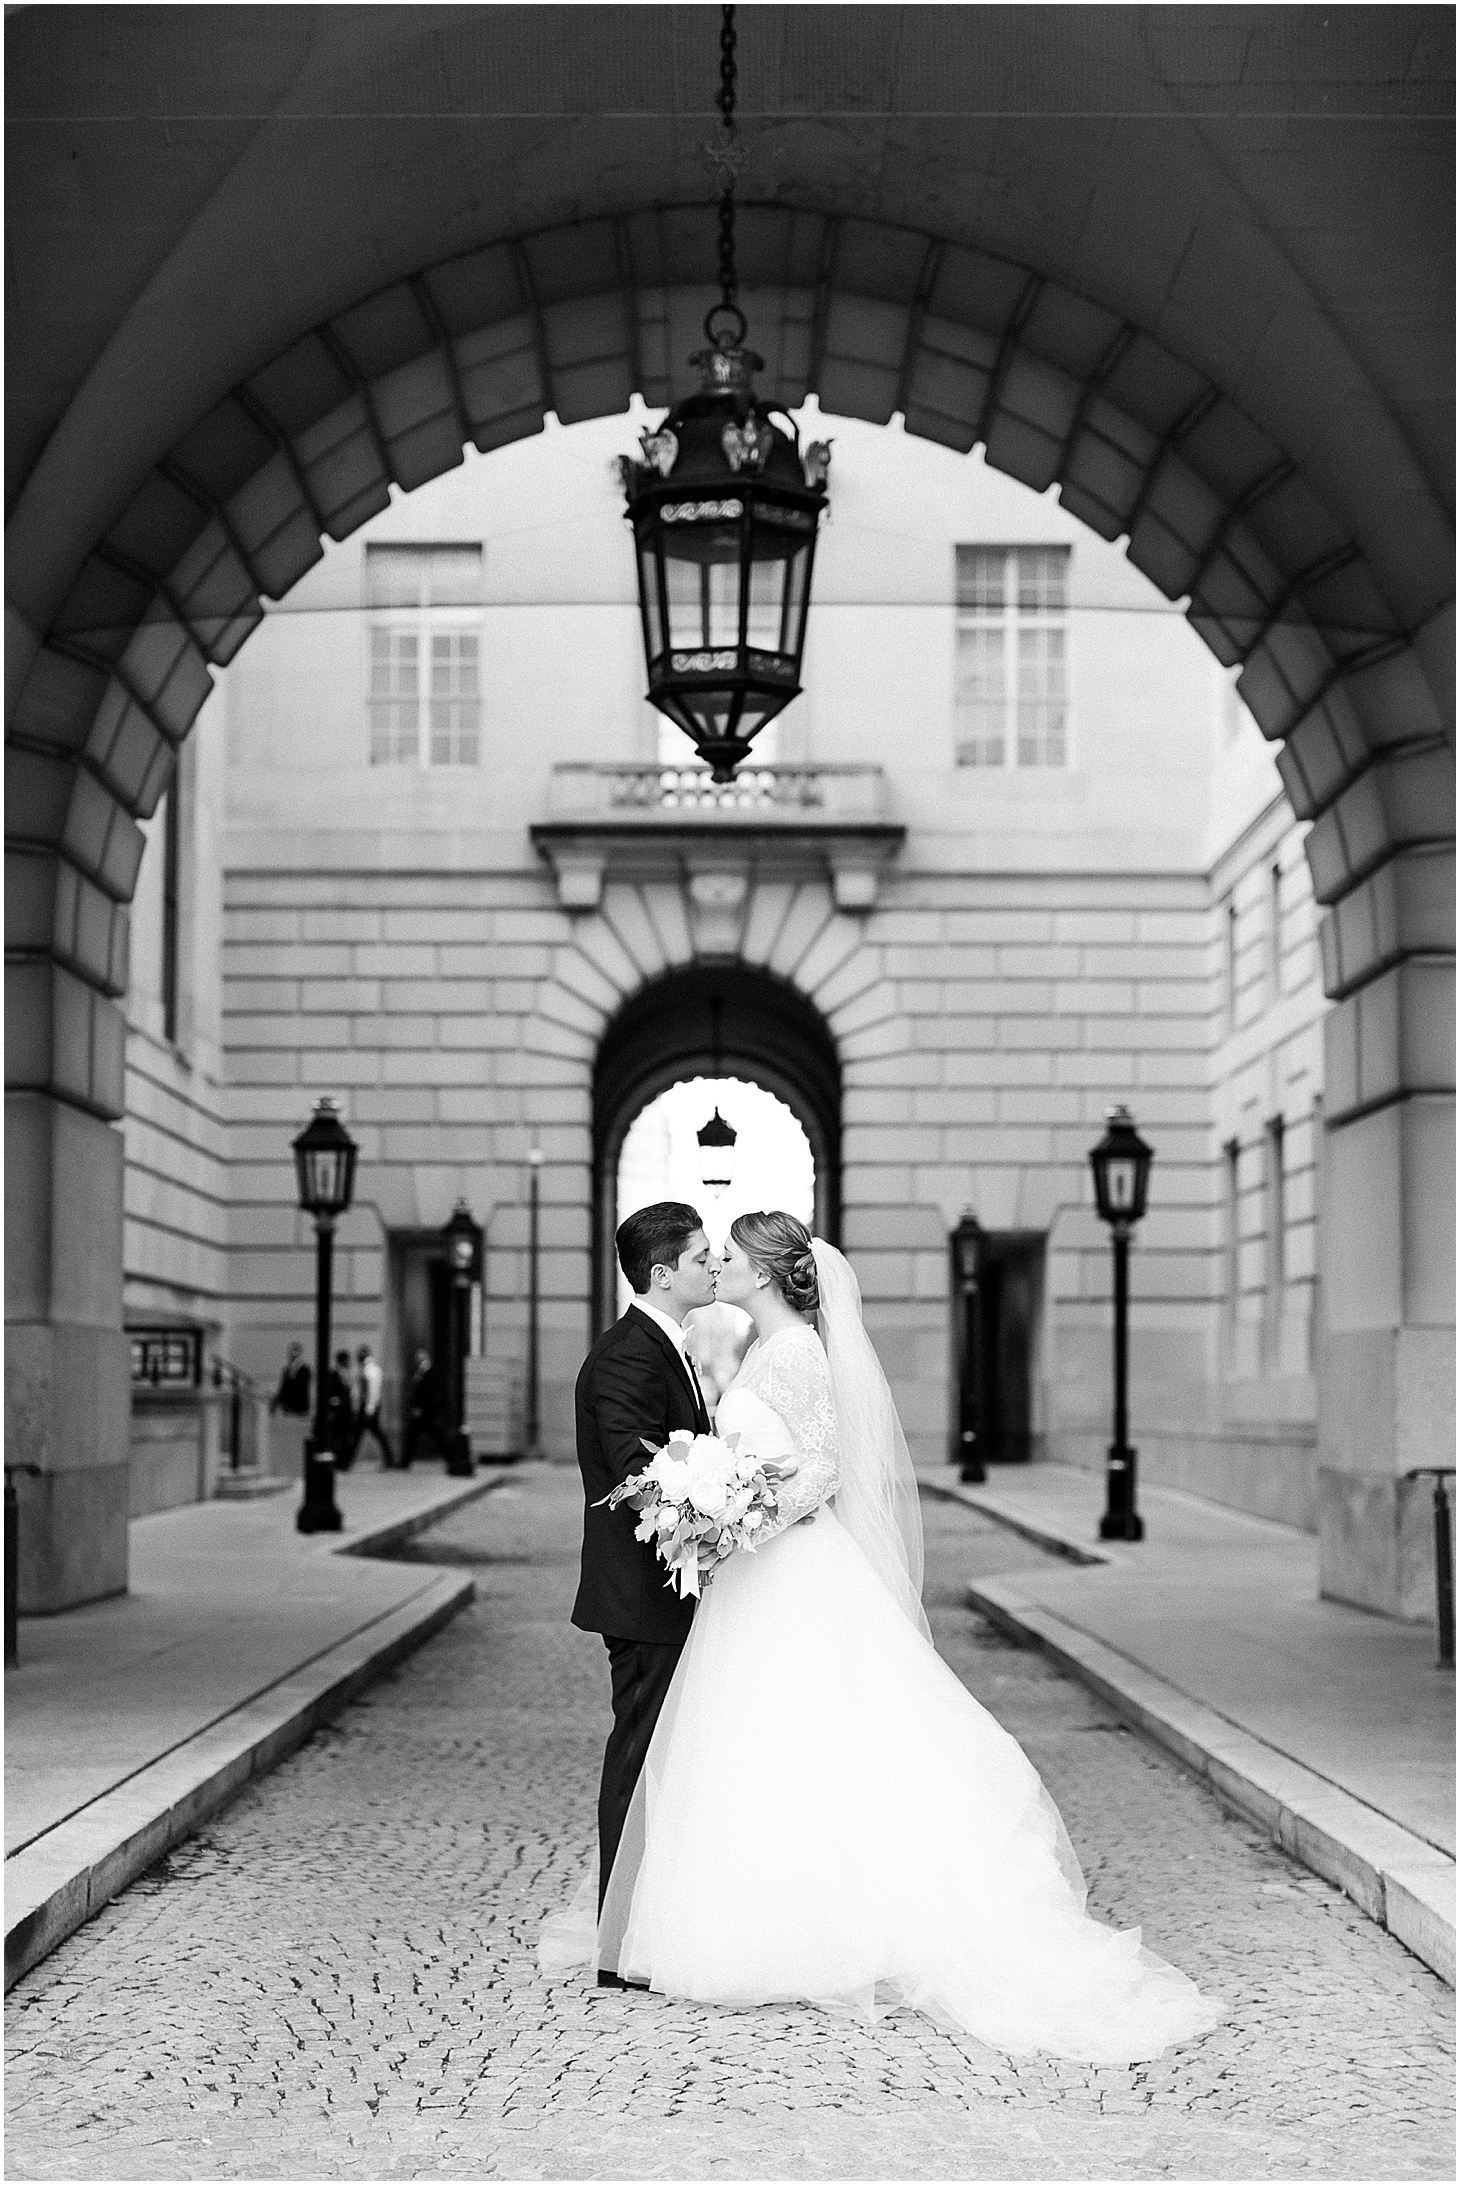 Wedding Portraits at Andrew Mellon Auditorium, Sarah Bradshaw Photography, DC Wedding Photographer